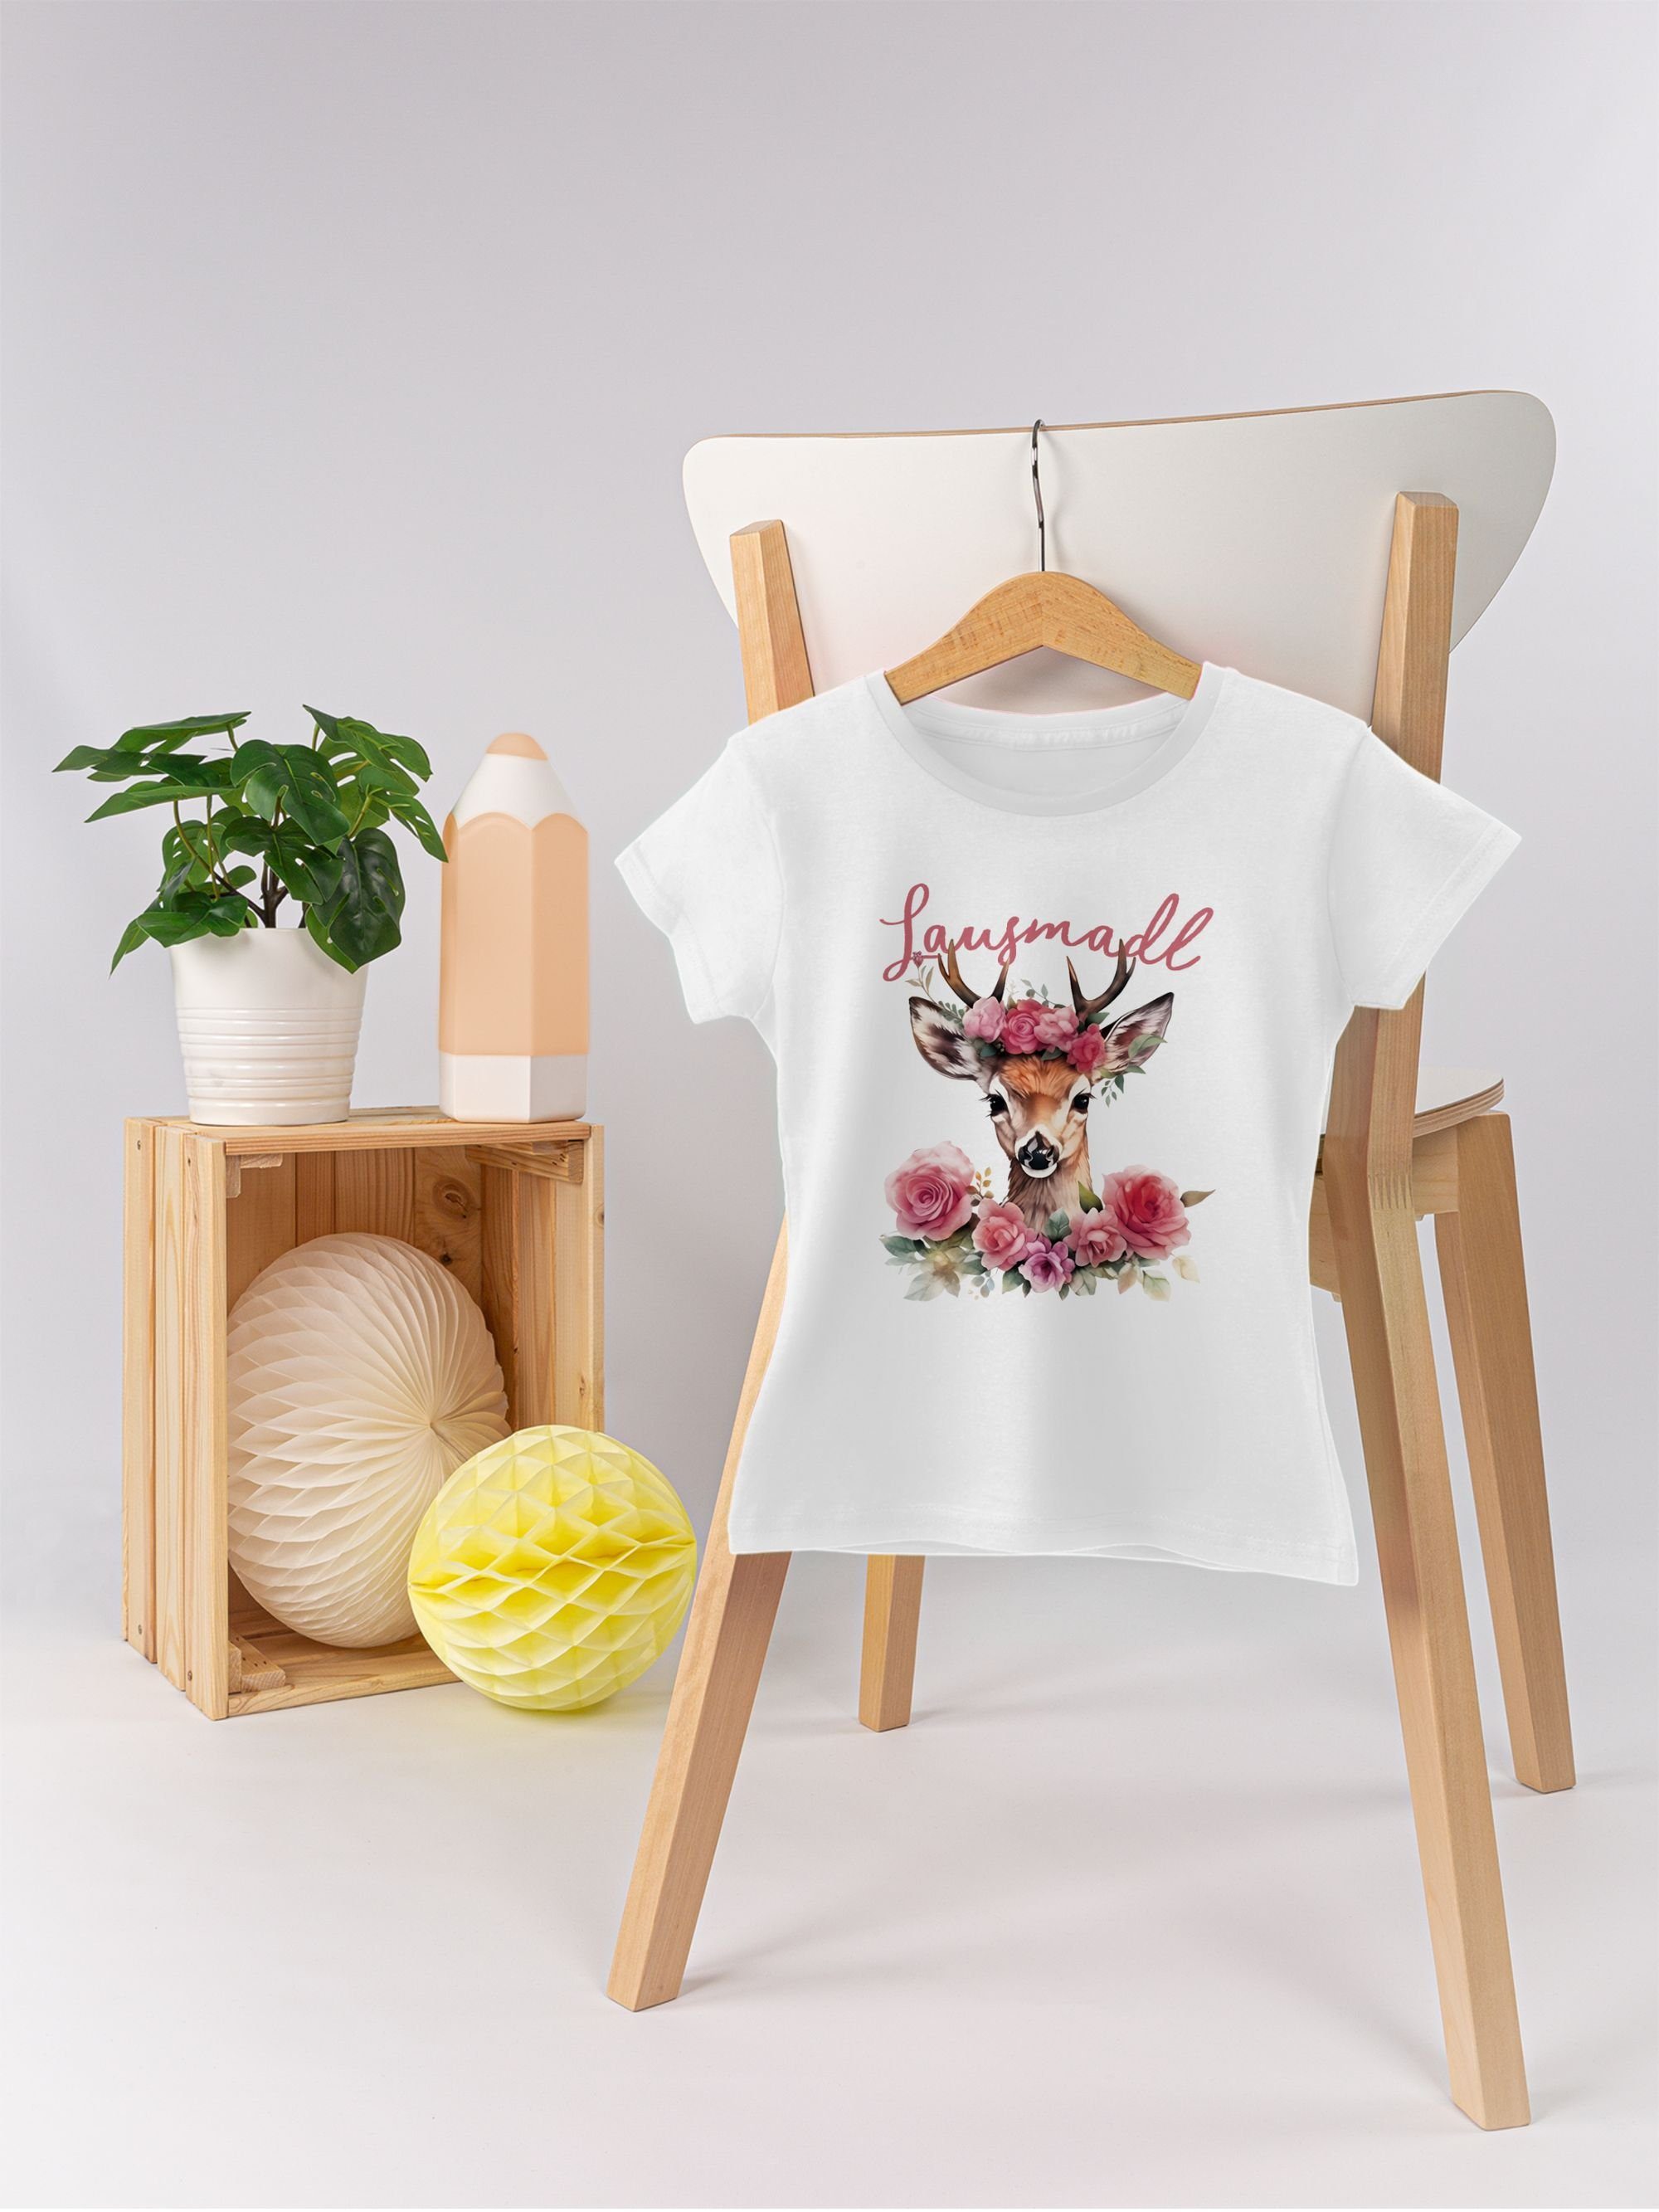 Shirtracer T-Shirt Lausemädchen Freches Geweih - Lousy Outfit 1 Weiß für Lausmädchen Lausmadl Kinder Oktoberfest Reh Mädchen Mode G